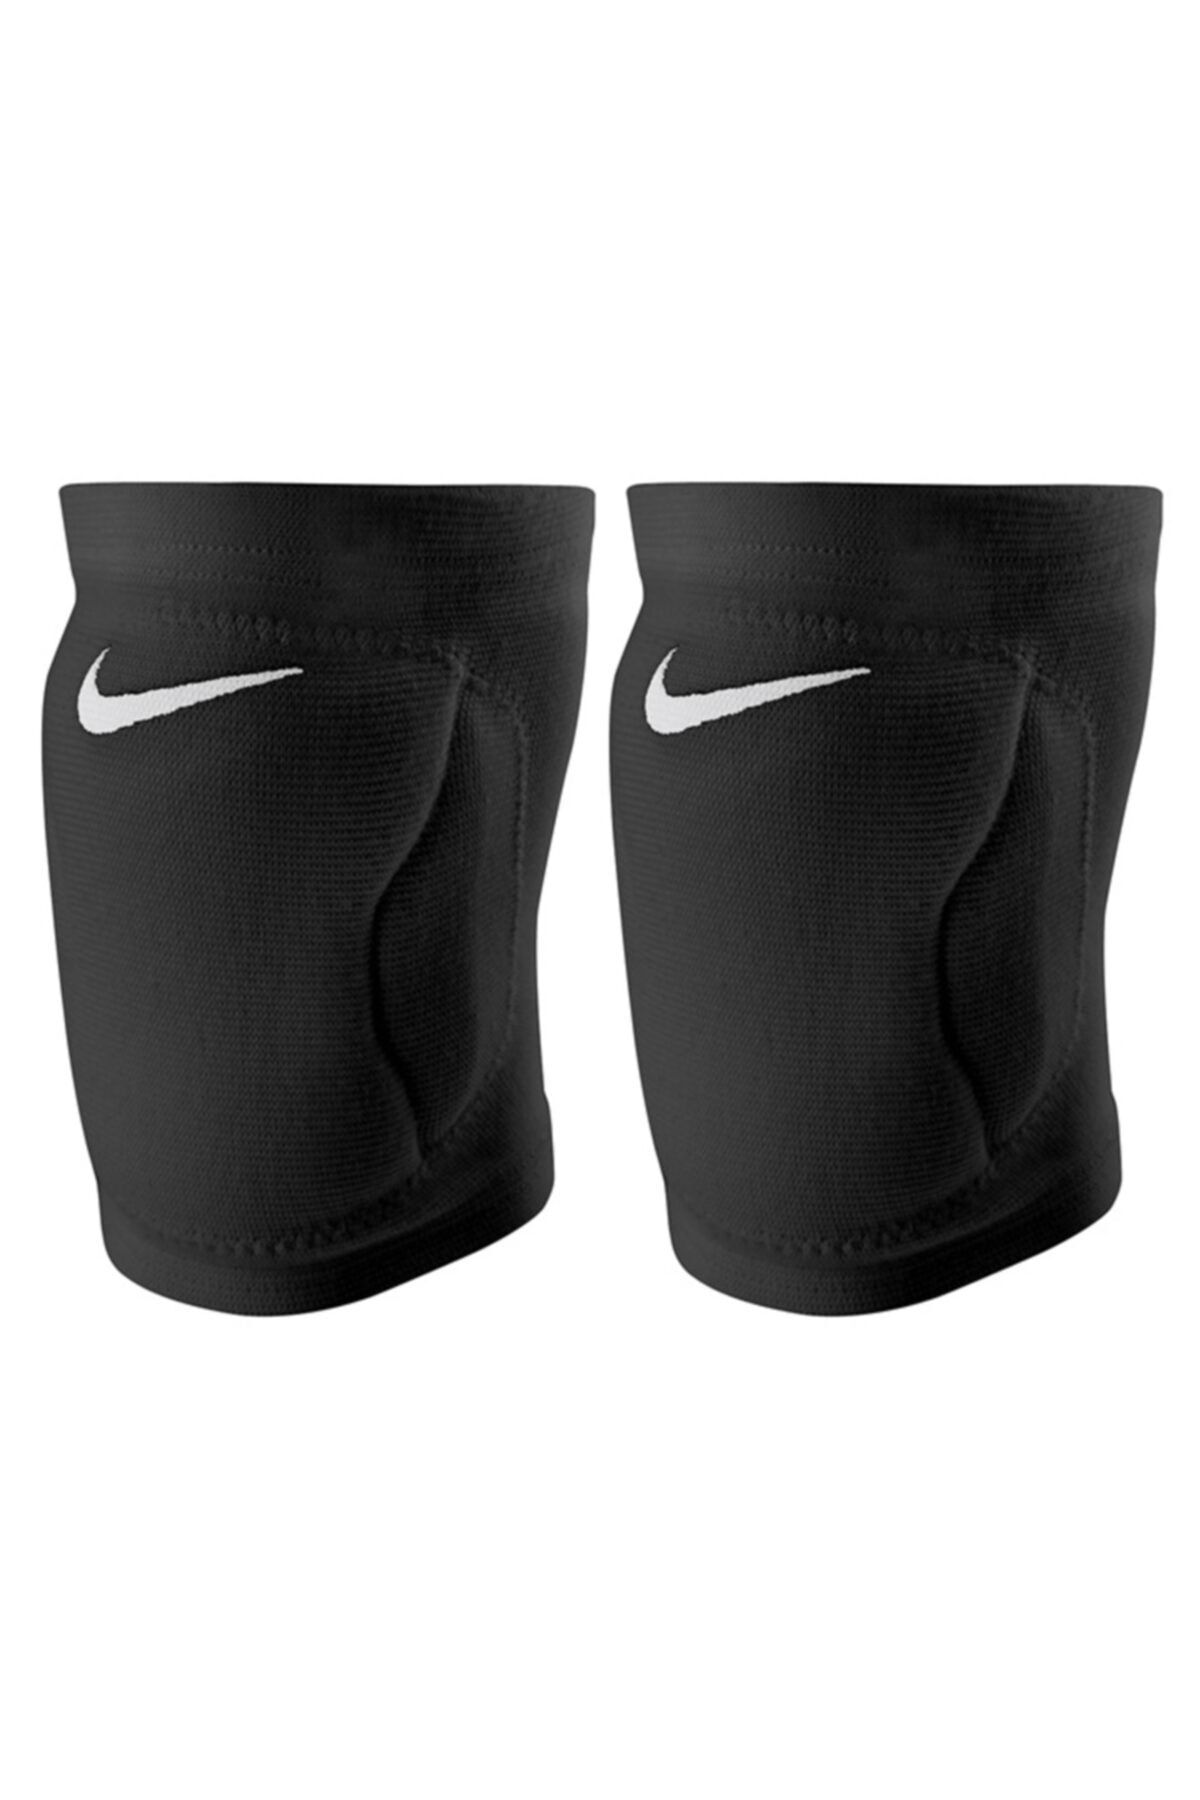 Nike N.vp.05.001.xx Streak Volleyball Knee Pad Voleybol Dizlik